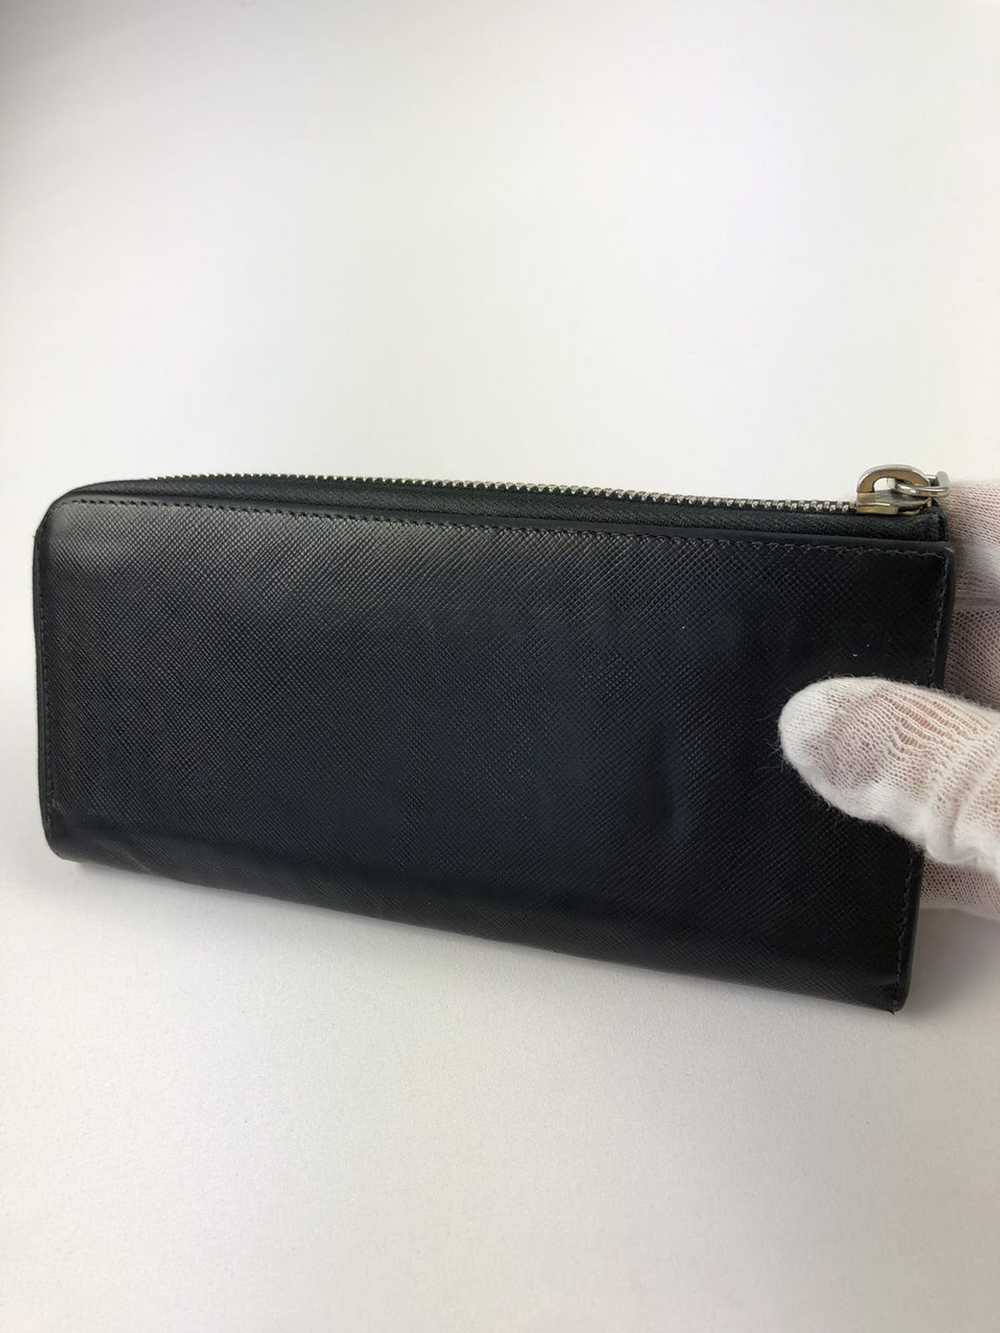 Prada Prada saffiano corner leather wallet - image 4